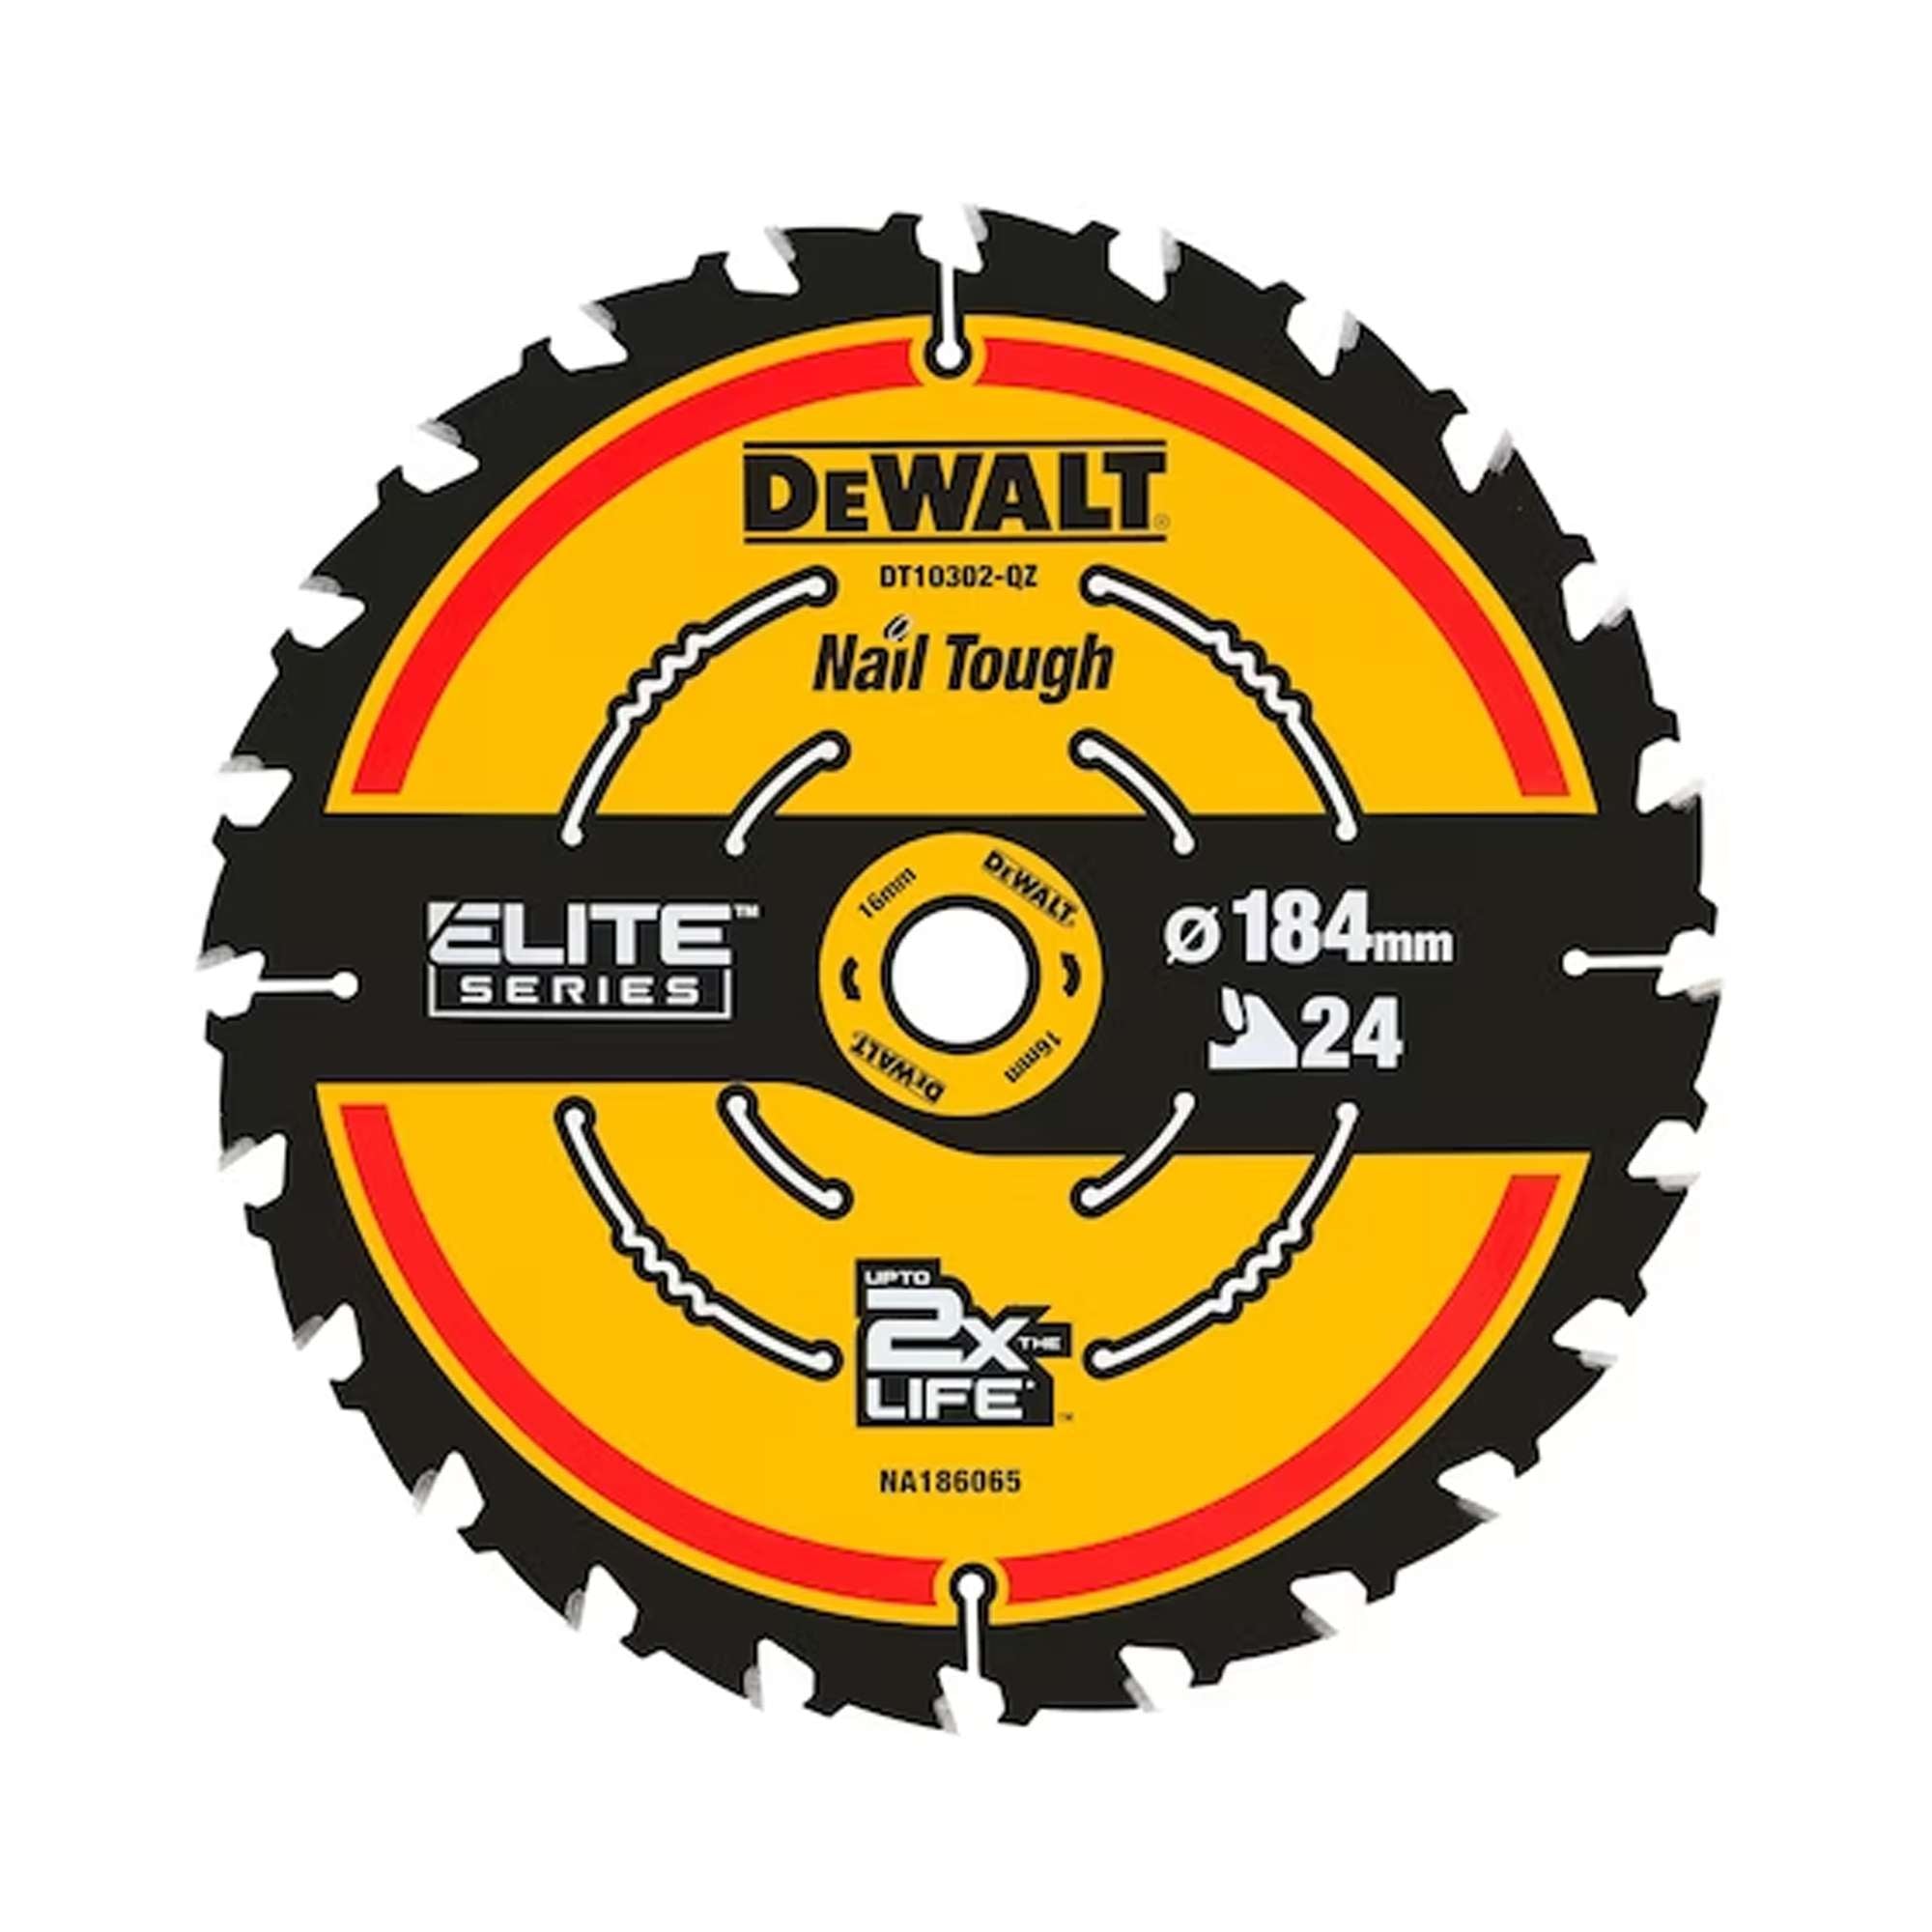 DEWALT DT10302-QZ blade